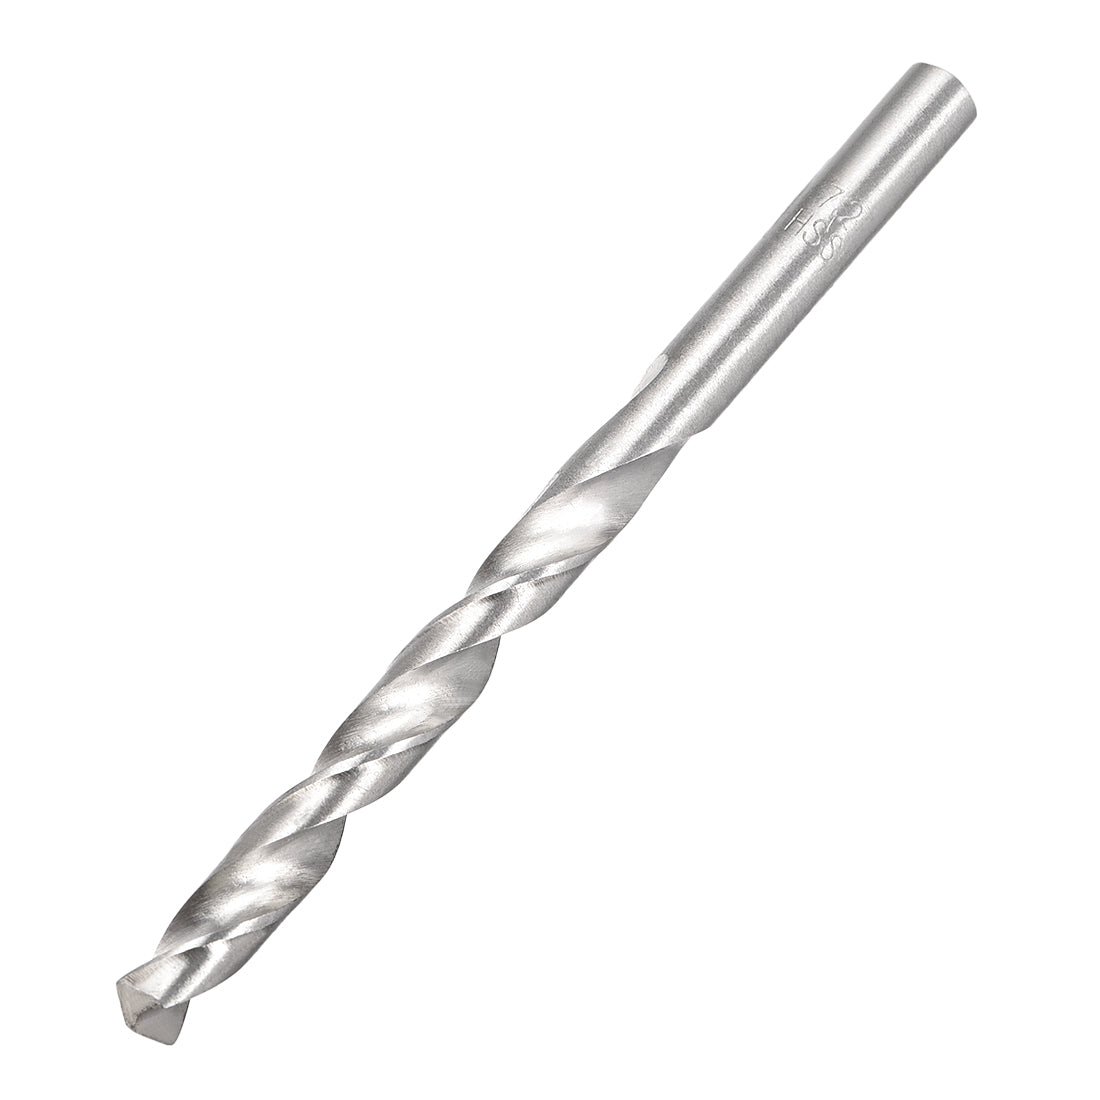 uxcell Uxcell 7.2mm Twist Drill High Speed Steel Bit HSS-4241 for Steel, Aluminum Alloy 1pcs